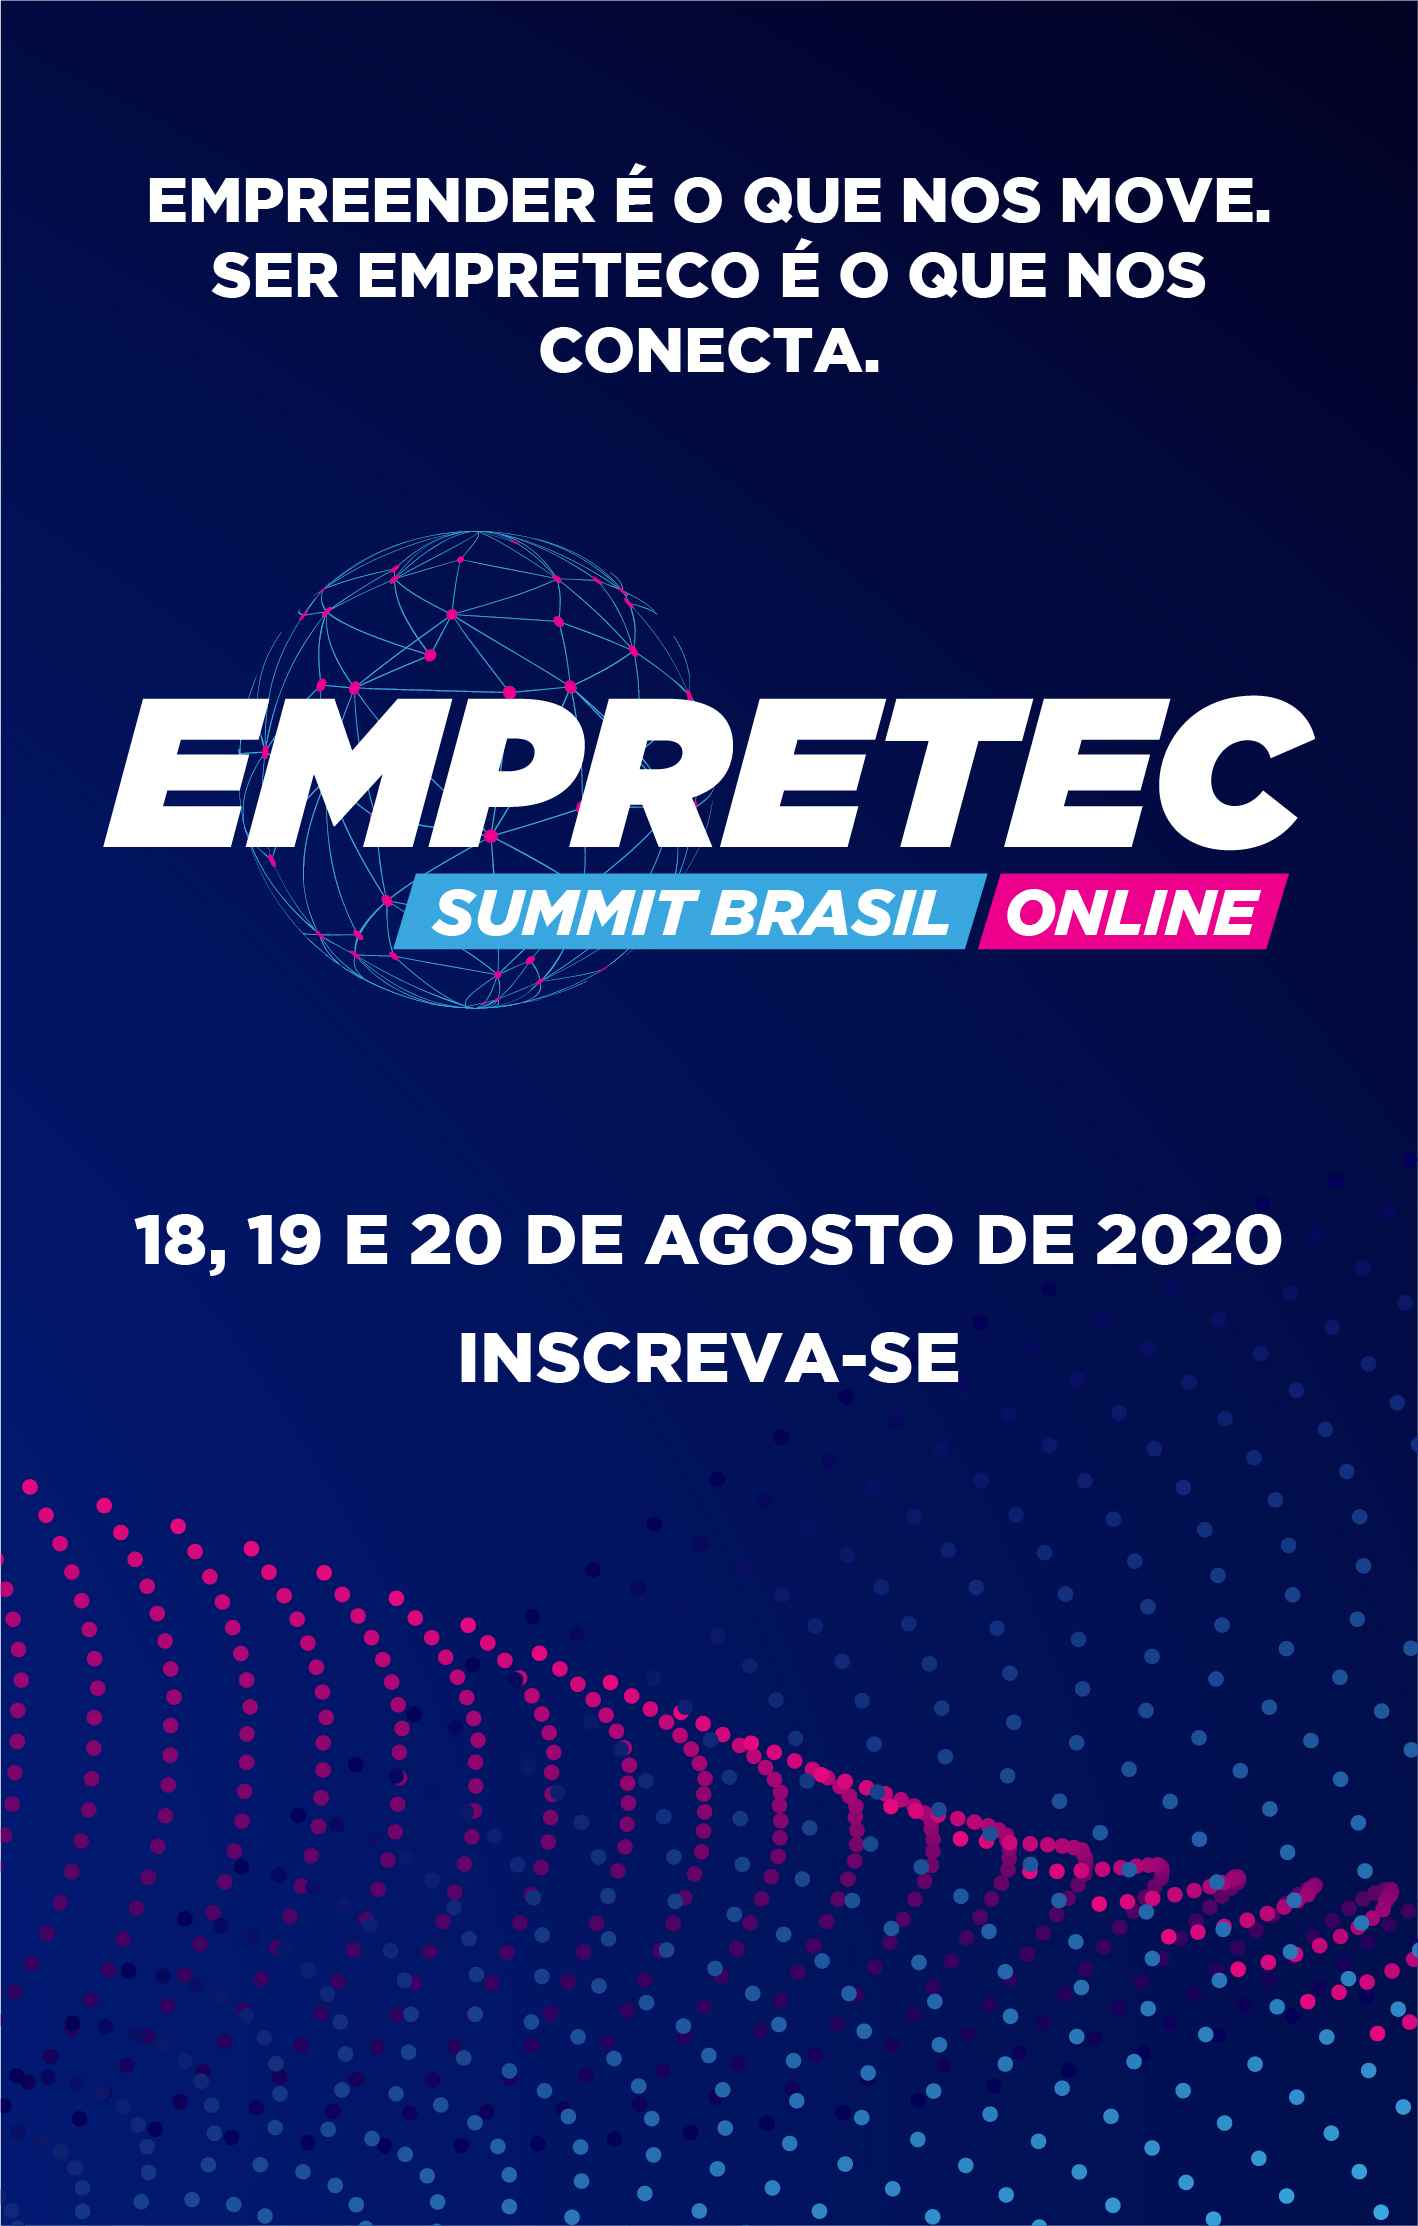 Sebrae promove em agosto Empretec Summit Brasil 2020 via internet 